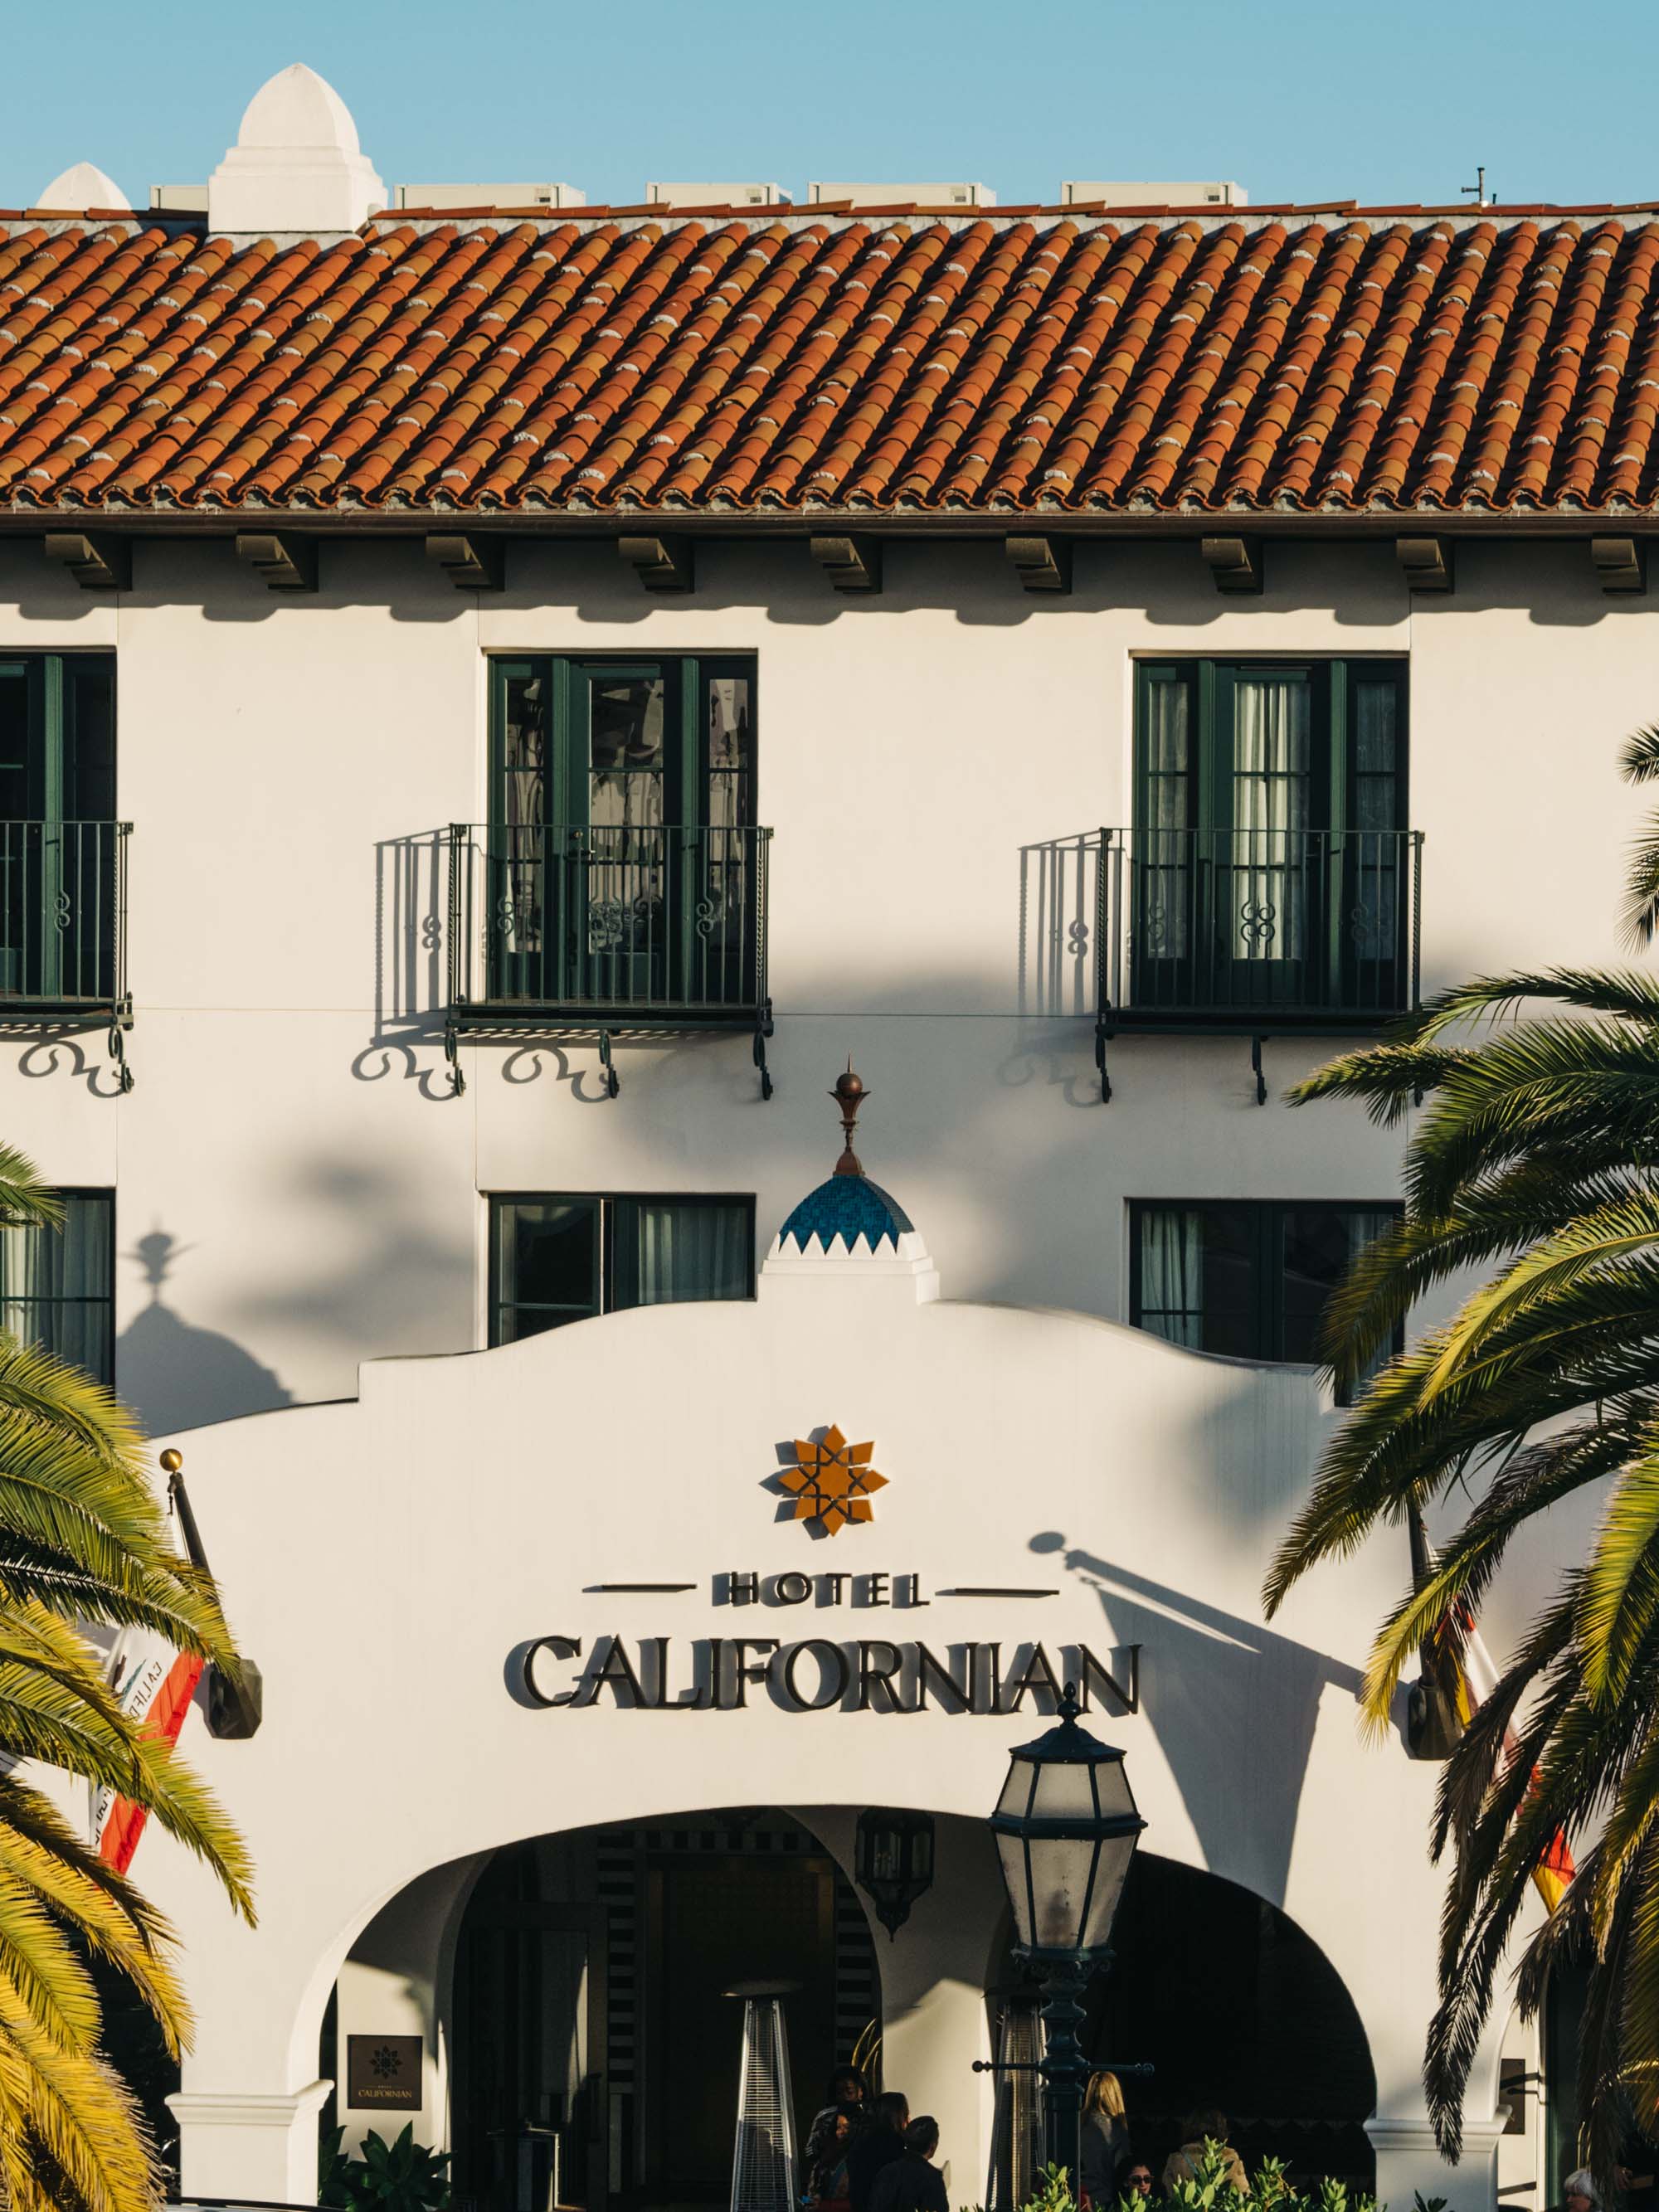 Hotel Californian Downtown Santa Barbara | Travel Photography by Carla Gabriel Garcia